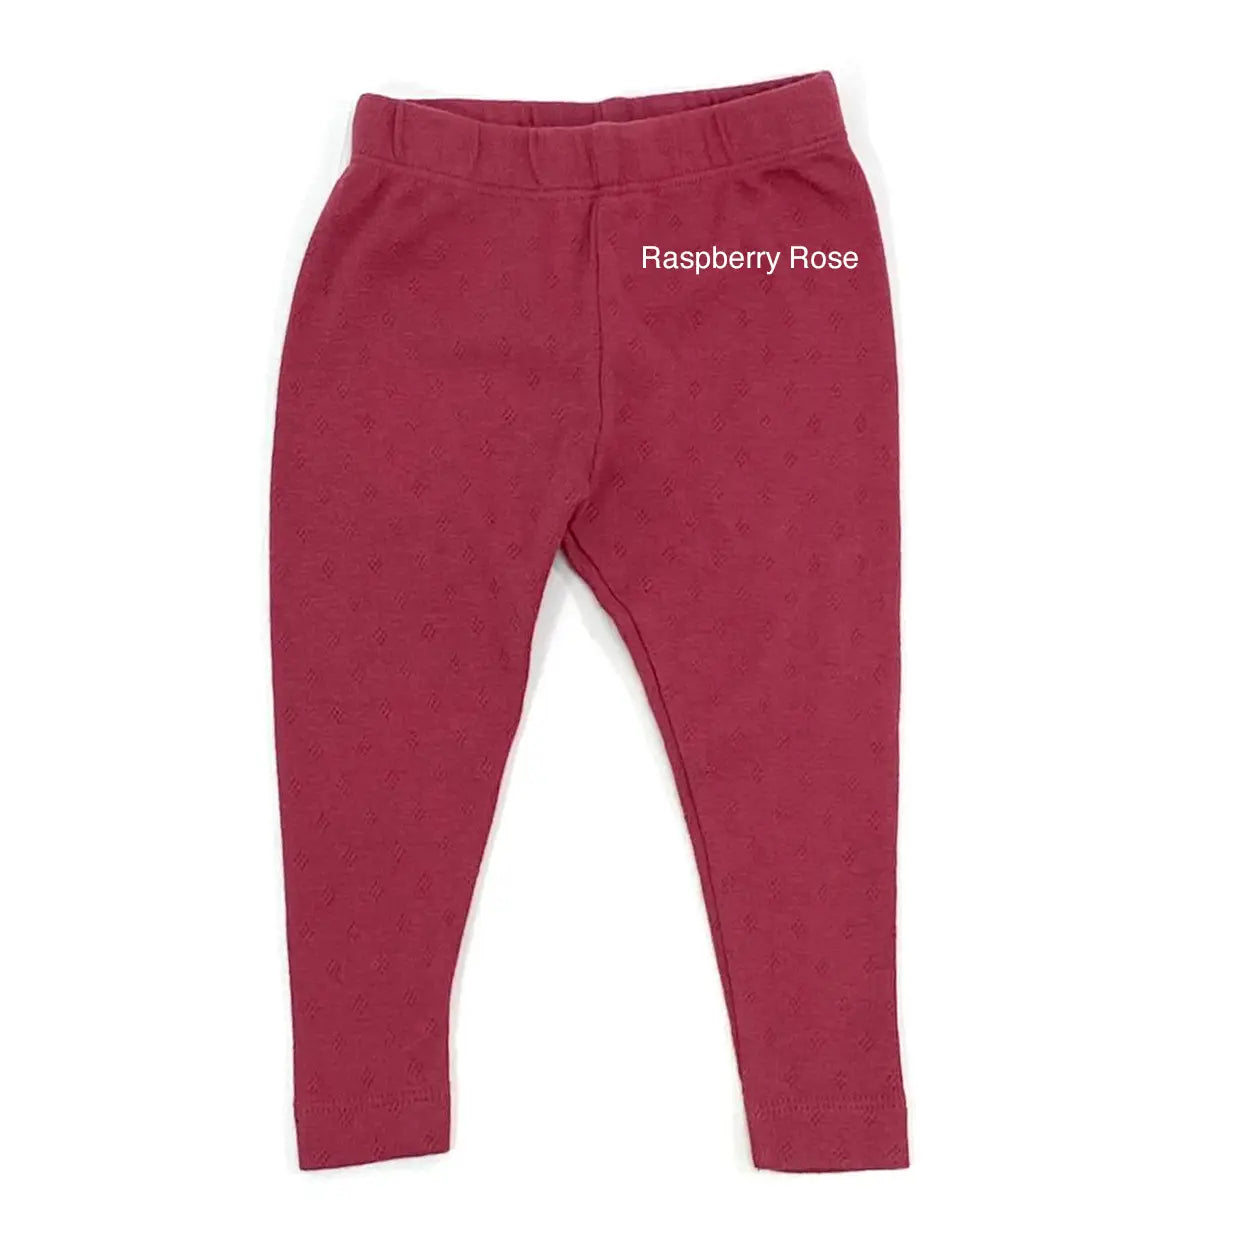 Stretch Knit Baby Leggings Pants (Organic Cotton) - Raspberry